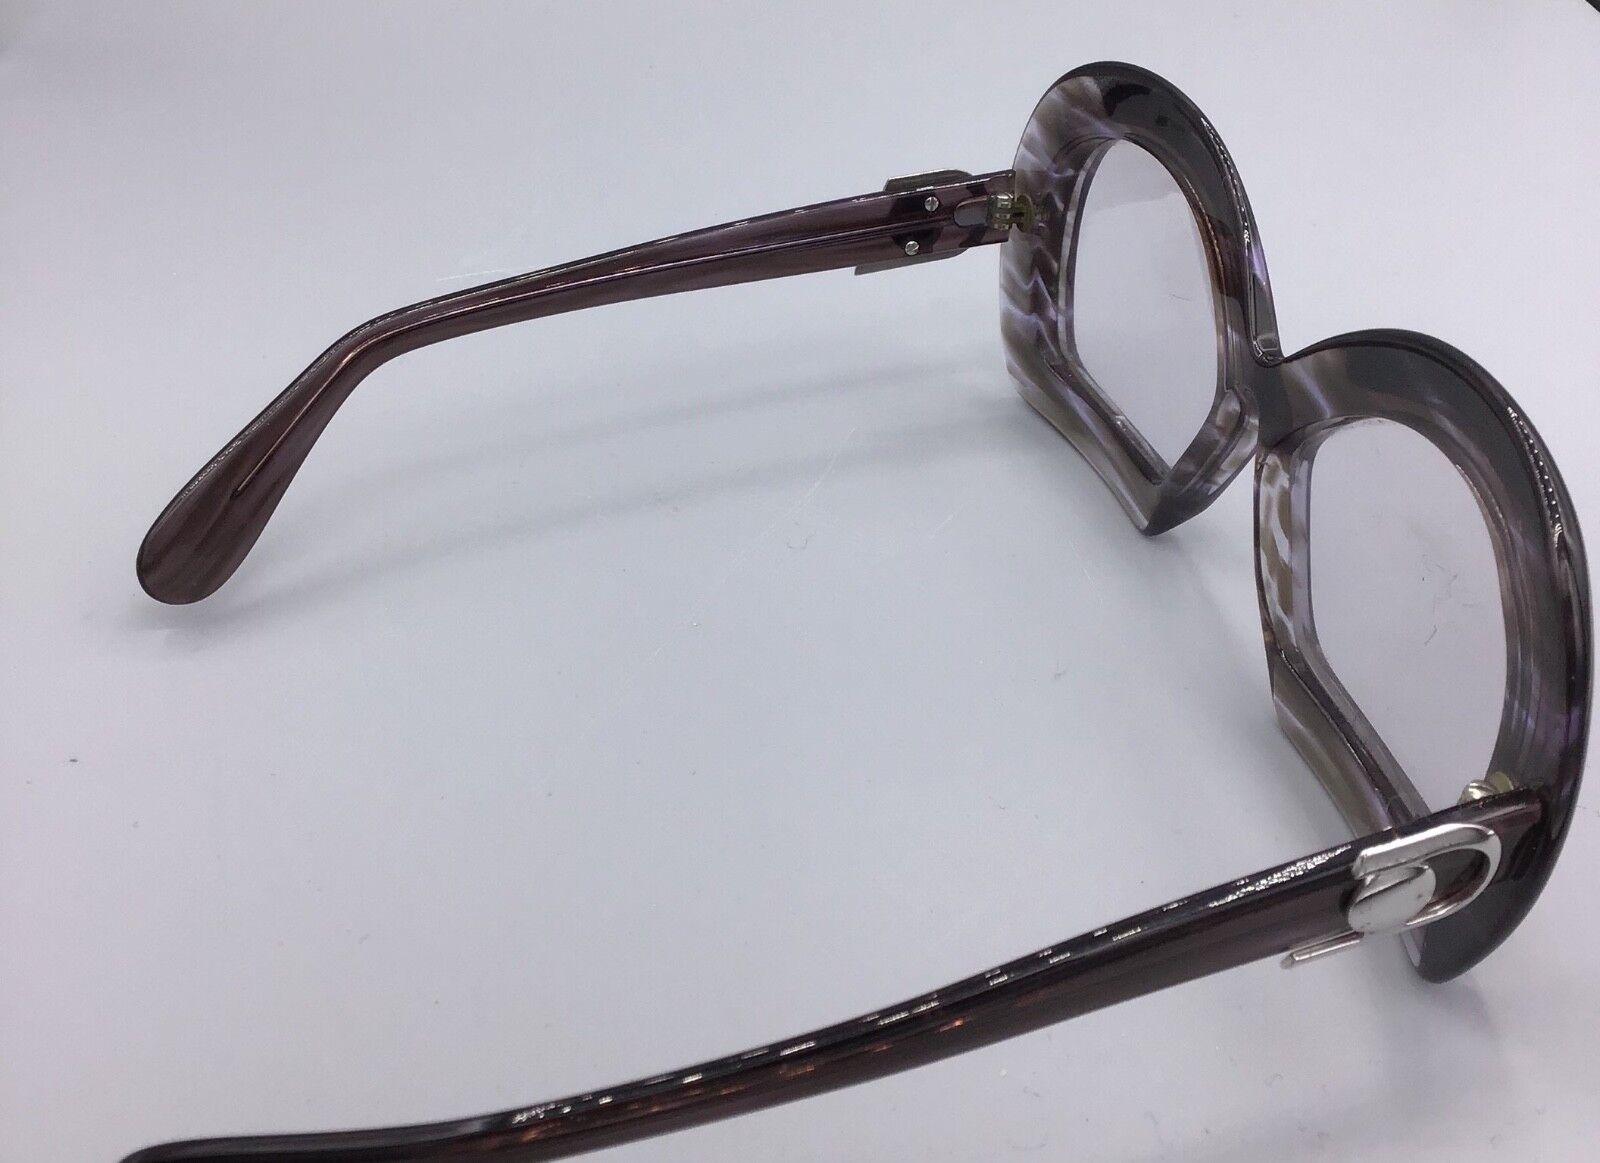 SILHOUETTE occhiale vintage Silhouette eyewear frame glasses lunettes brillen